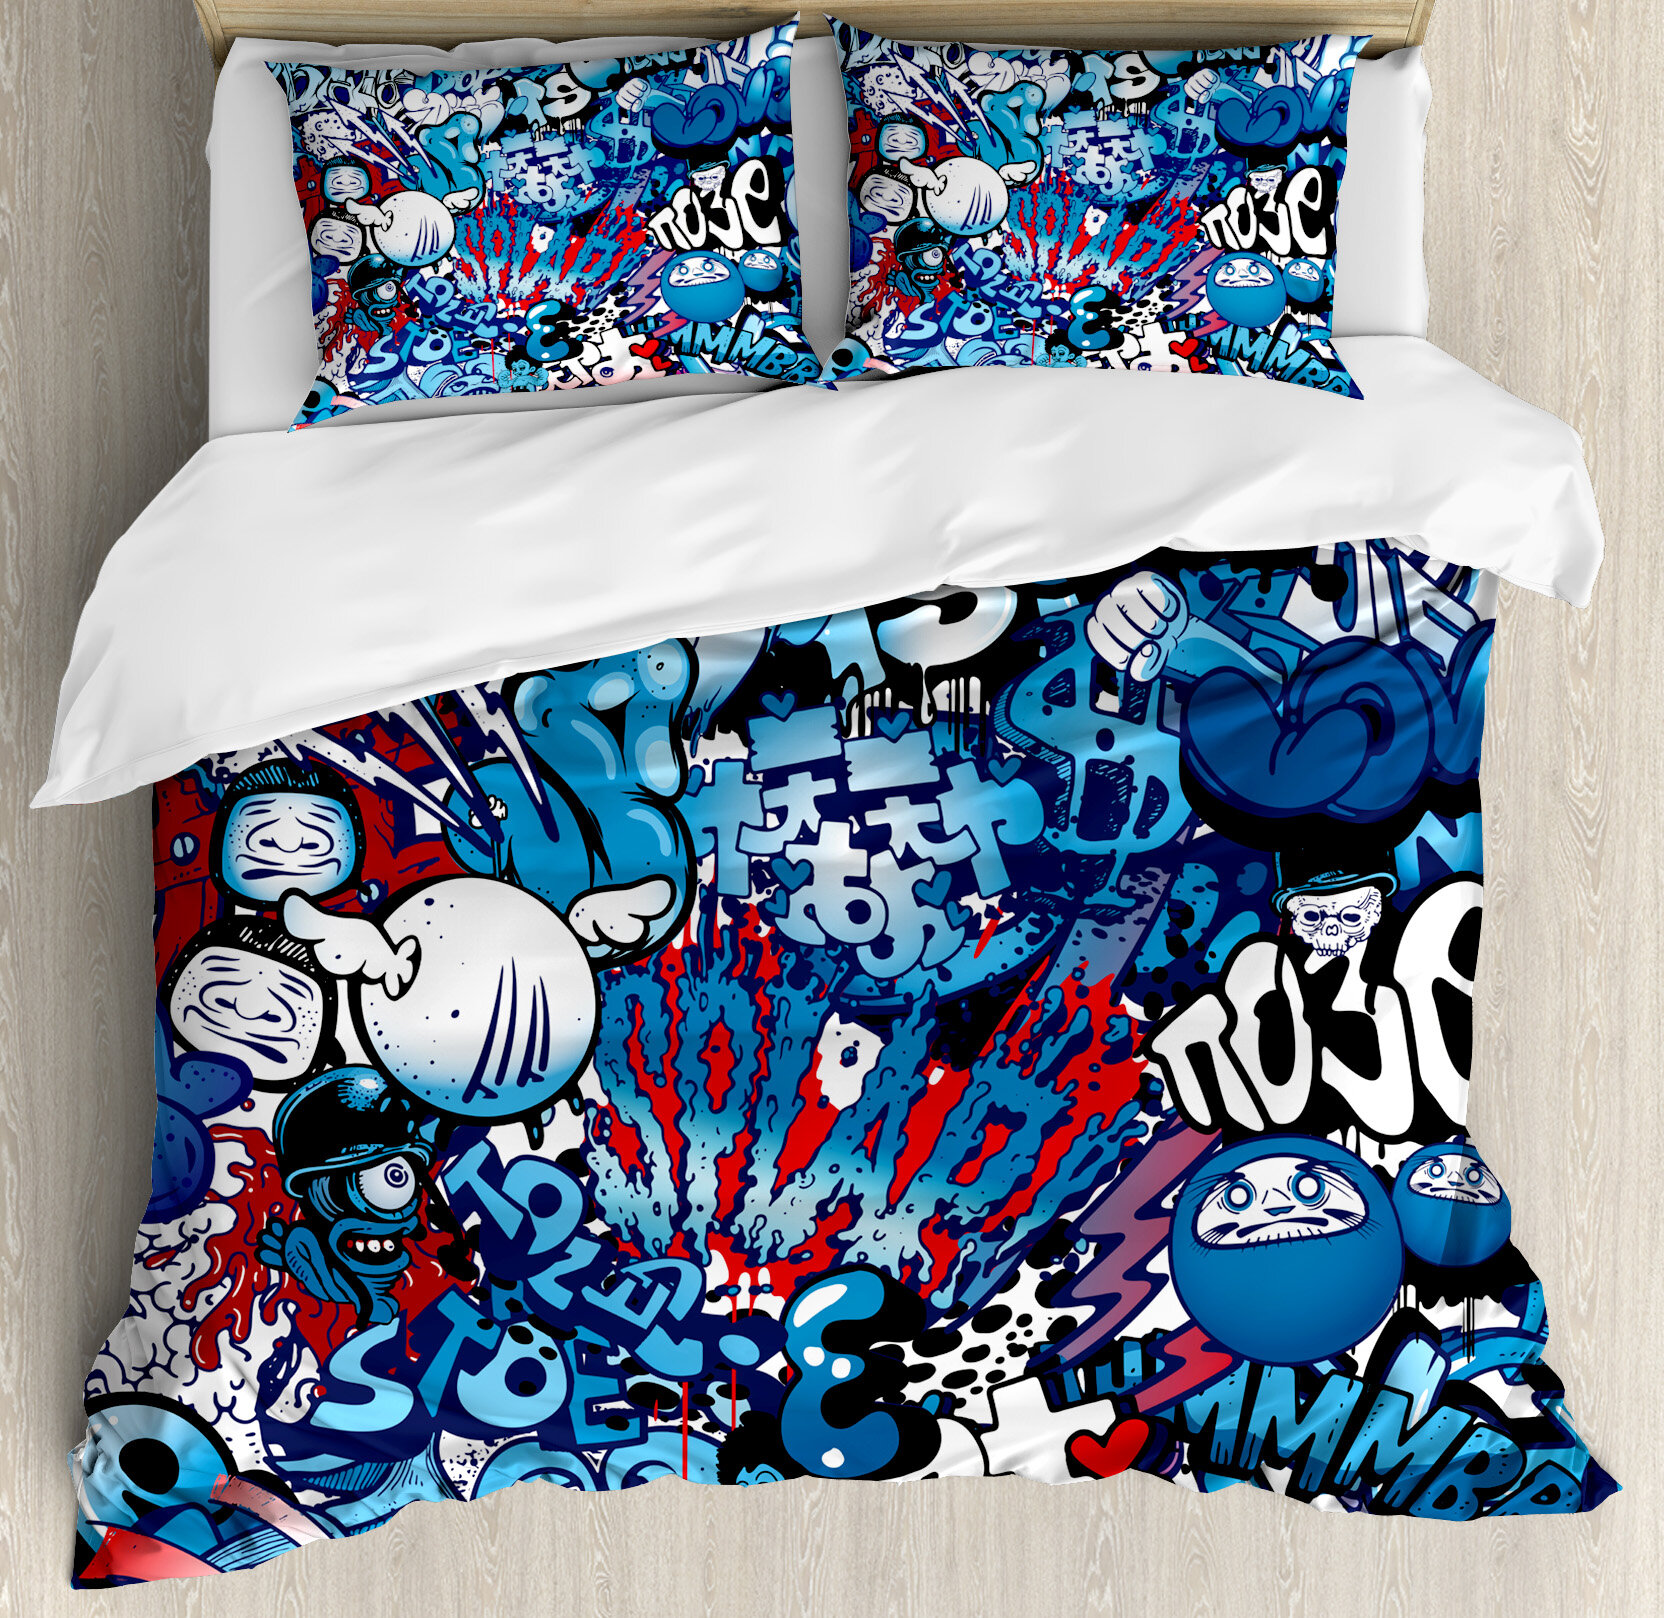 Modern Teenager Style Image Wall Street Graffiti Graphic Colorful Design Artwork Duvet Cover Set